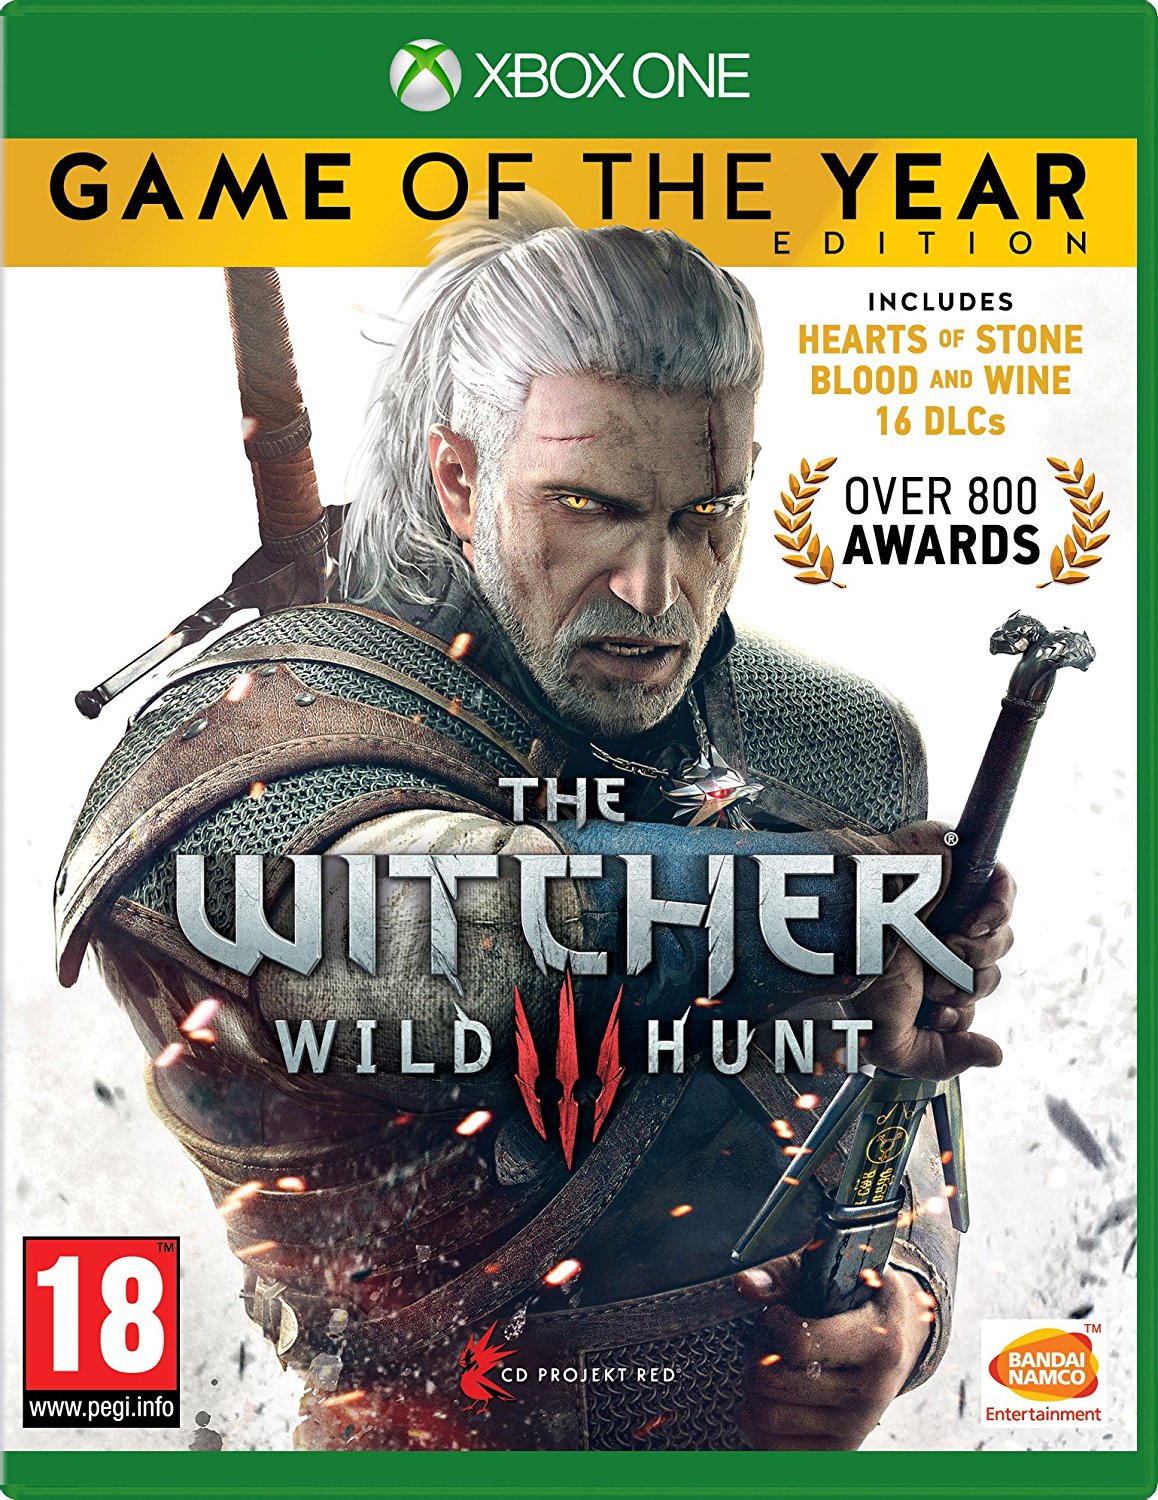 The Witcher 3: Wild Hunt GOTY Edition Digital Download Key (Xbox One): Europe - 